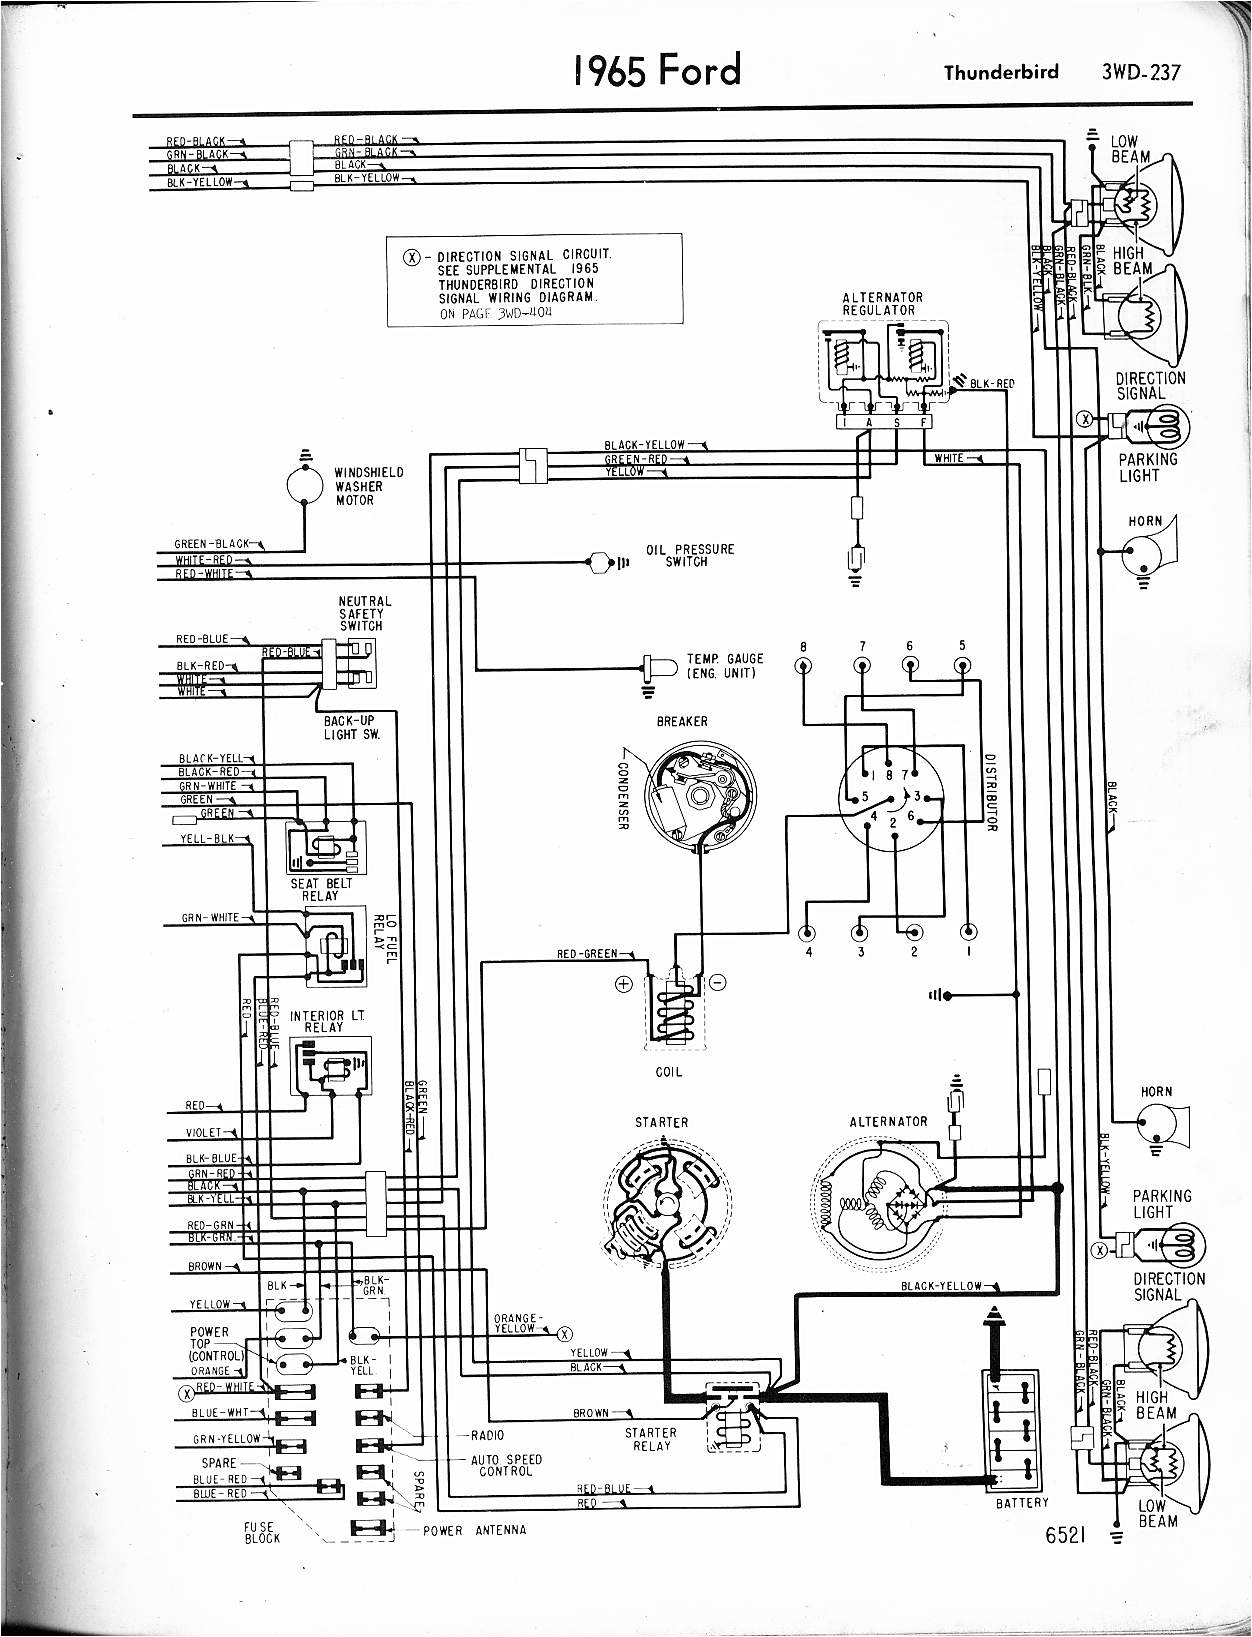 1965 ford wiring diagram wiring diagram name with 1965 ford mustang moreover alternator voltage regulator wiring